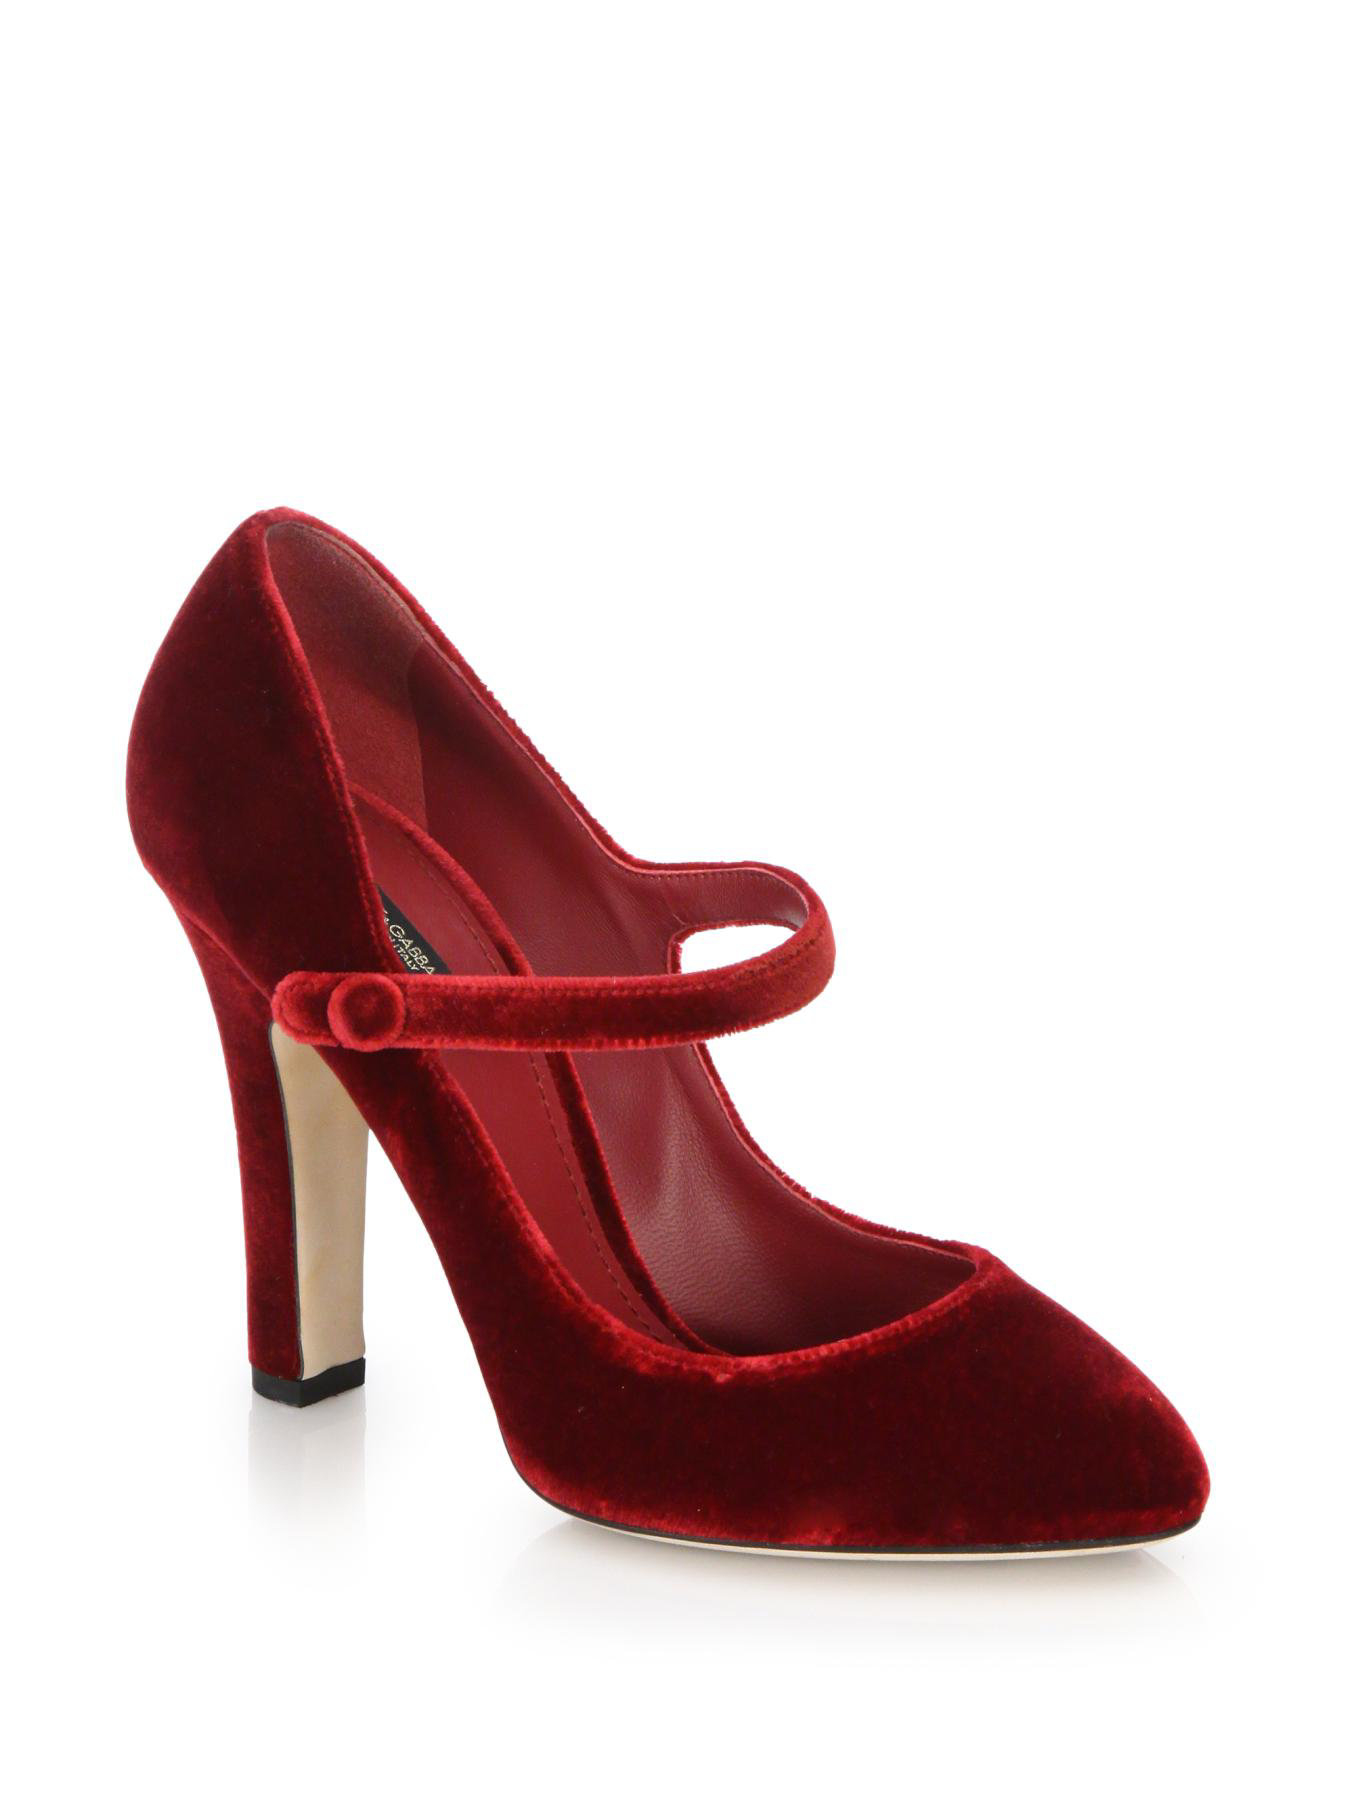 Dolce & Gabbana Velvet Mary Pumps in Red - Lyst